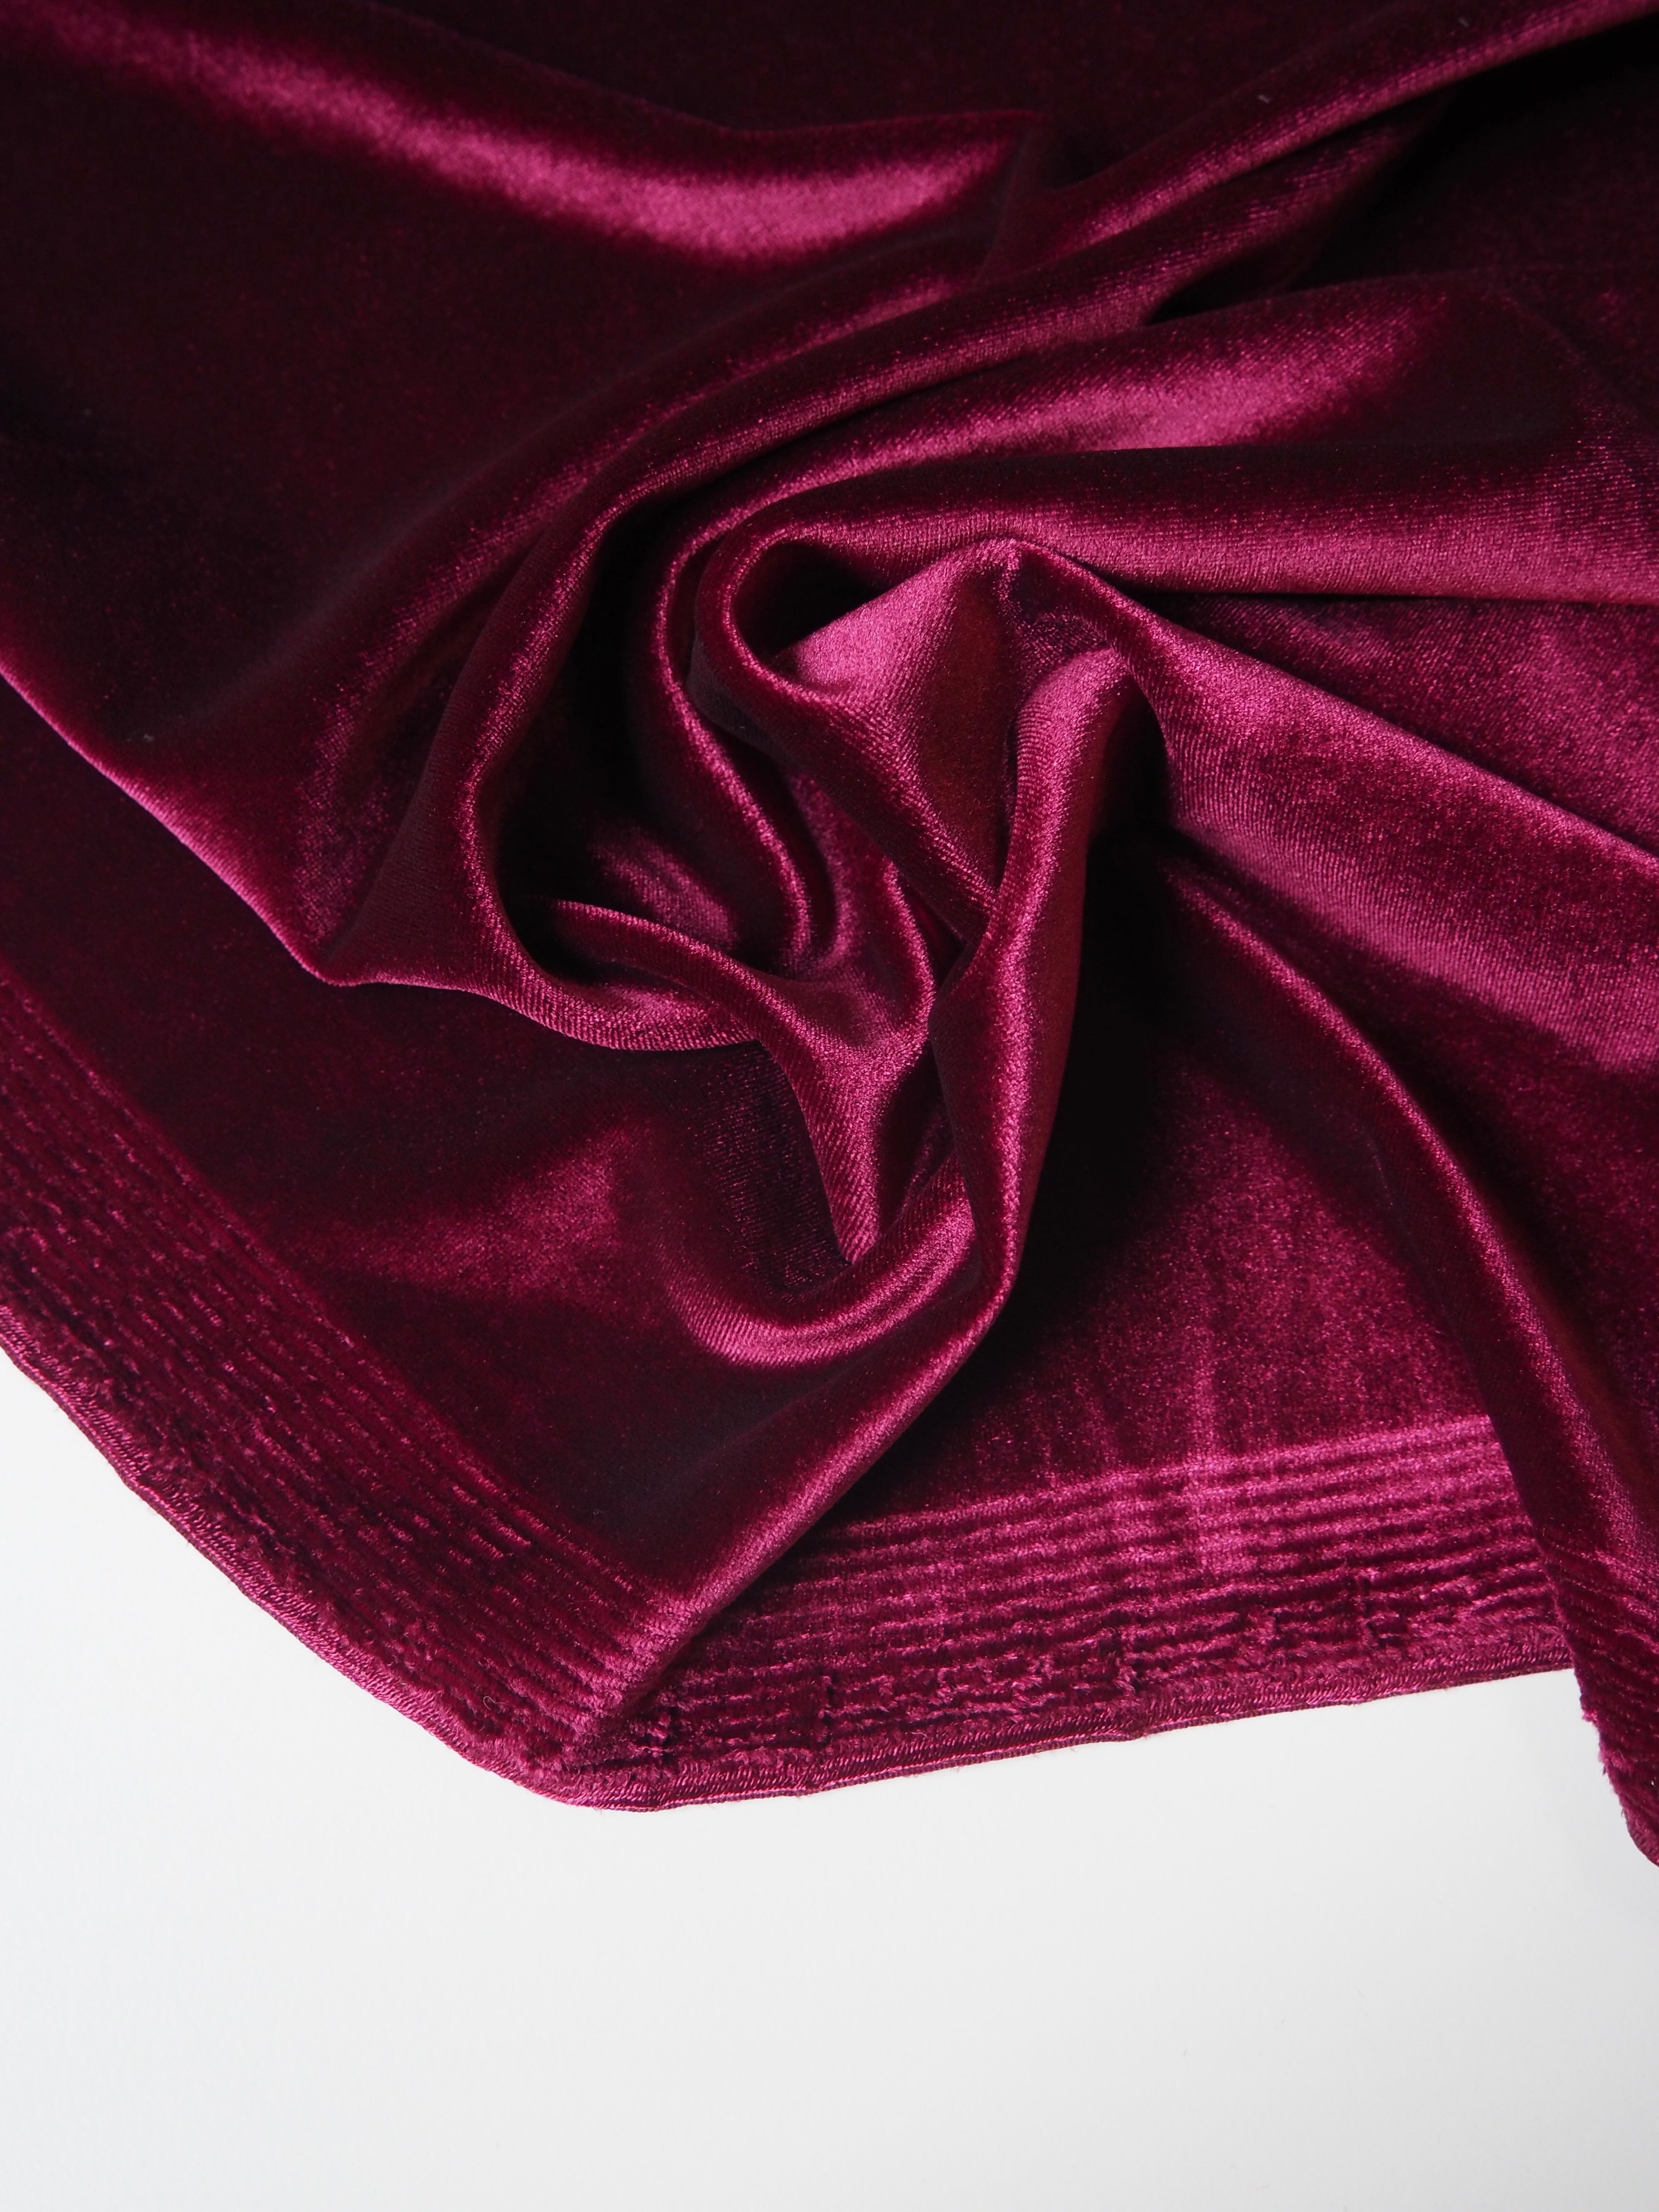 Bordeaux Burgundy, Velvet Fabric, Medium Weight, Upholstery Fabric, 54  Wide